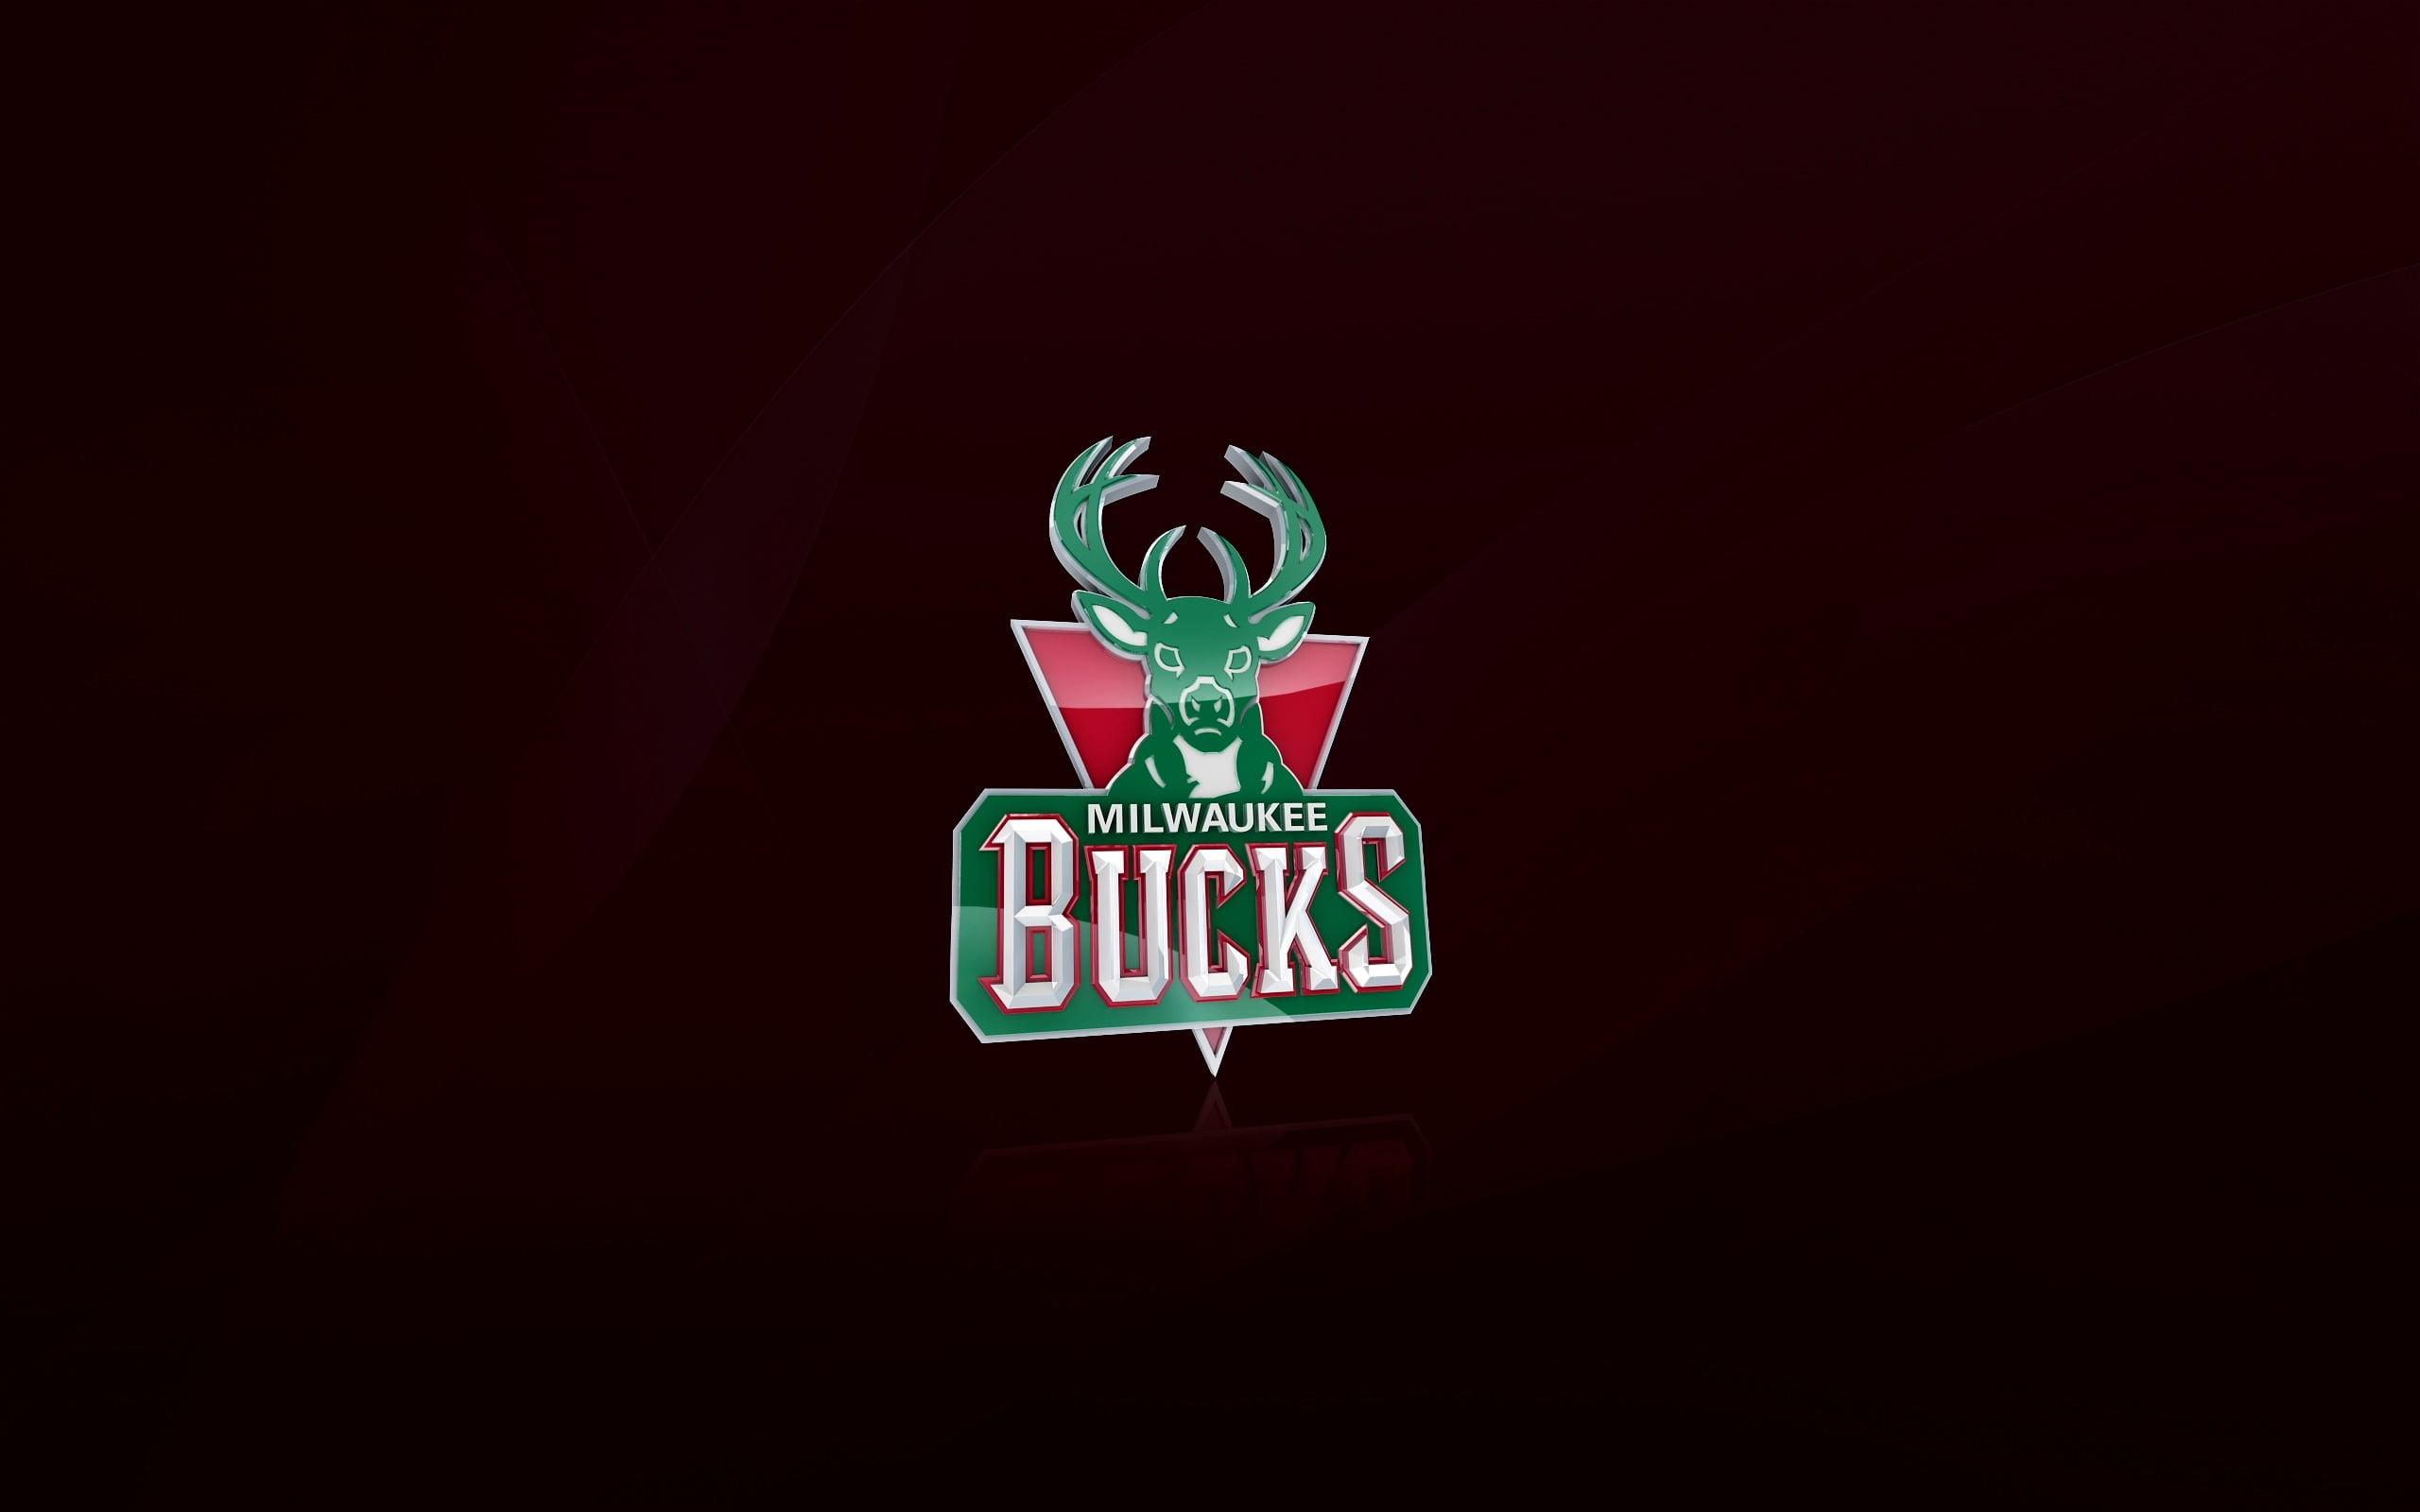 Milwaukee Bucks digital wallpaper